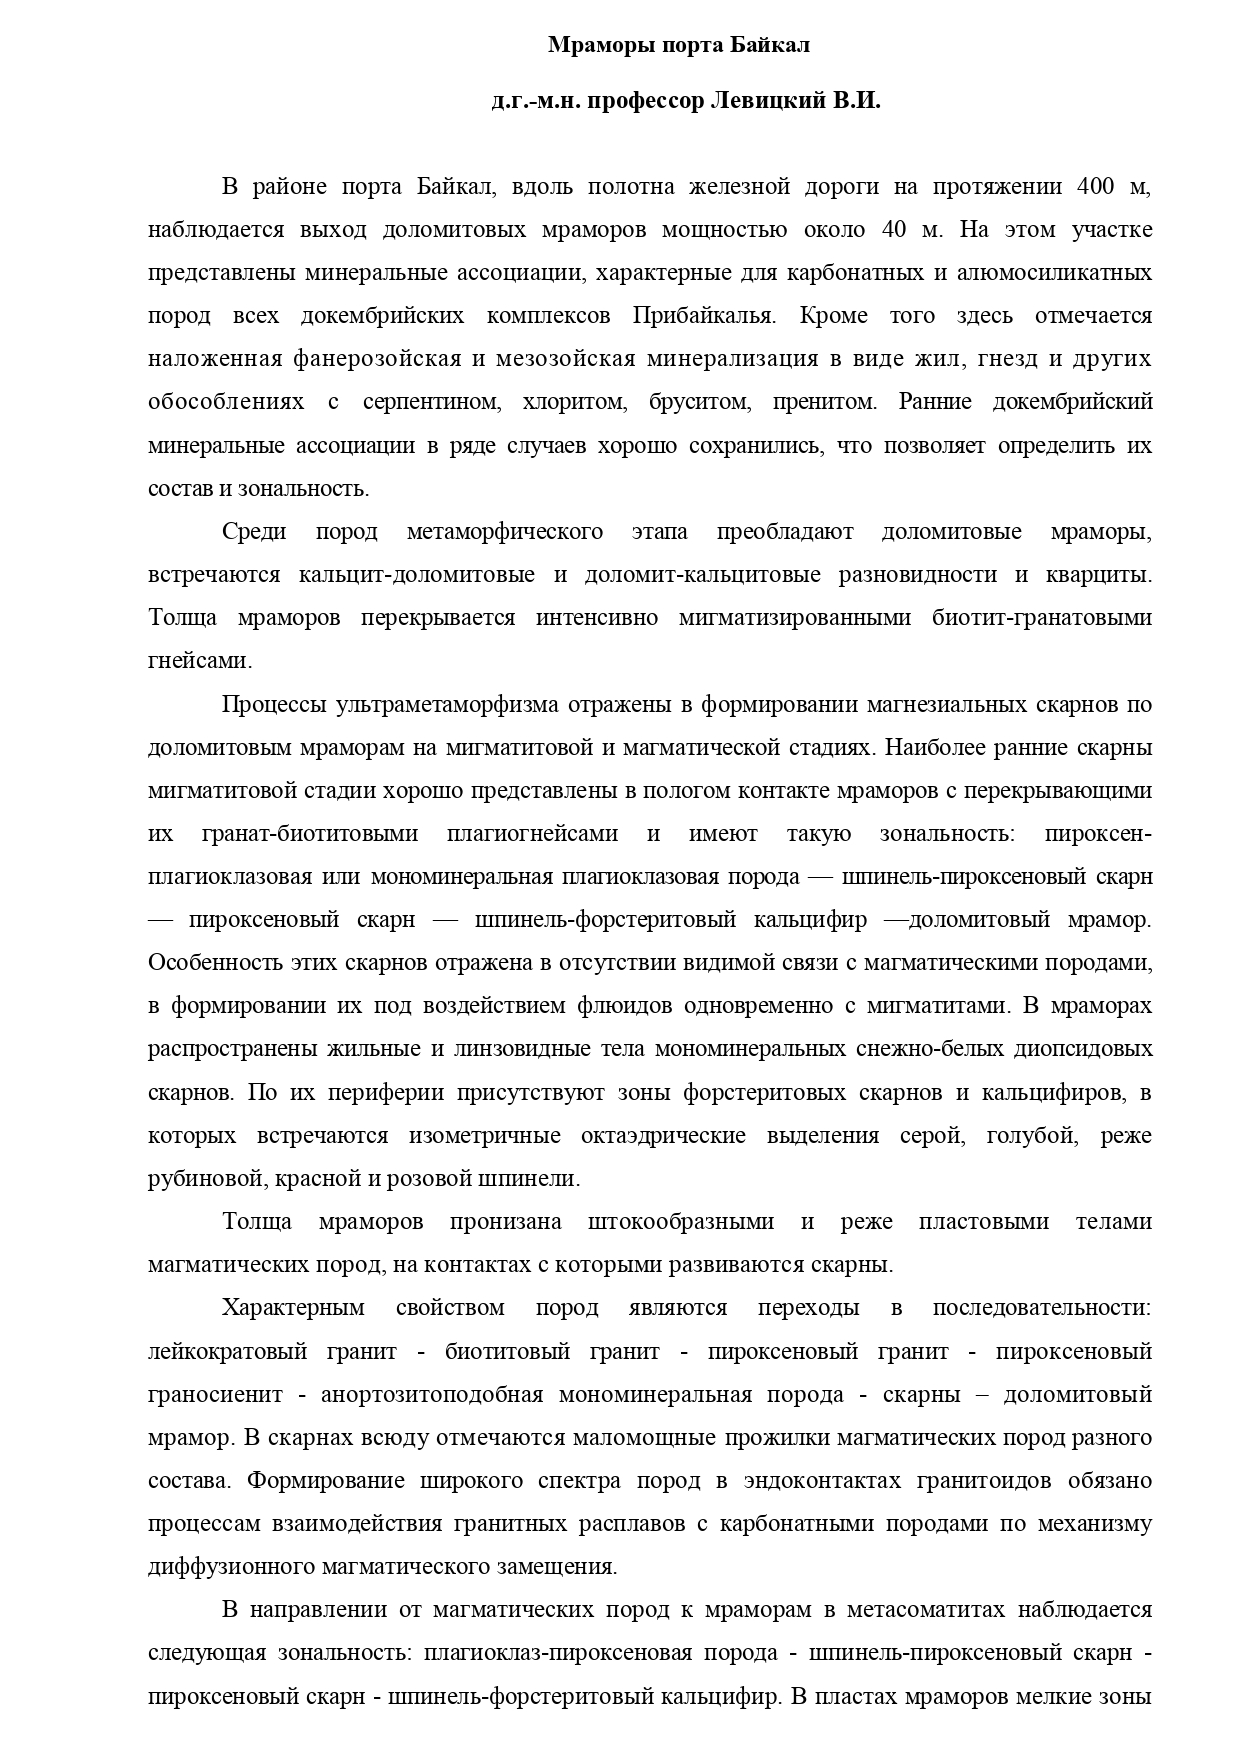 5Мраморы порта БайкалОкон pages to jpg 0001